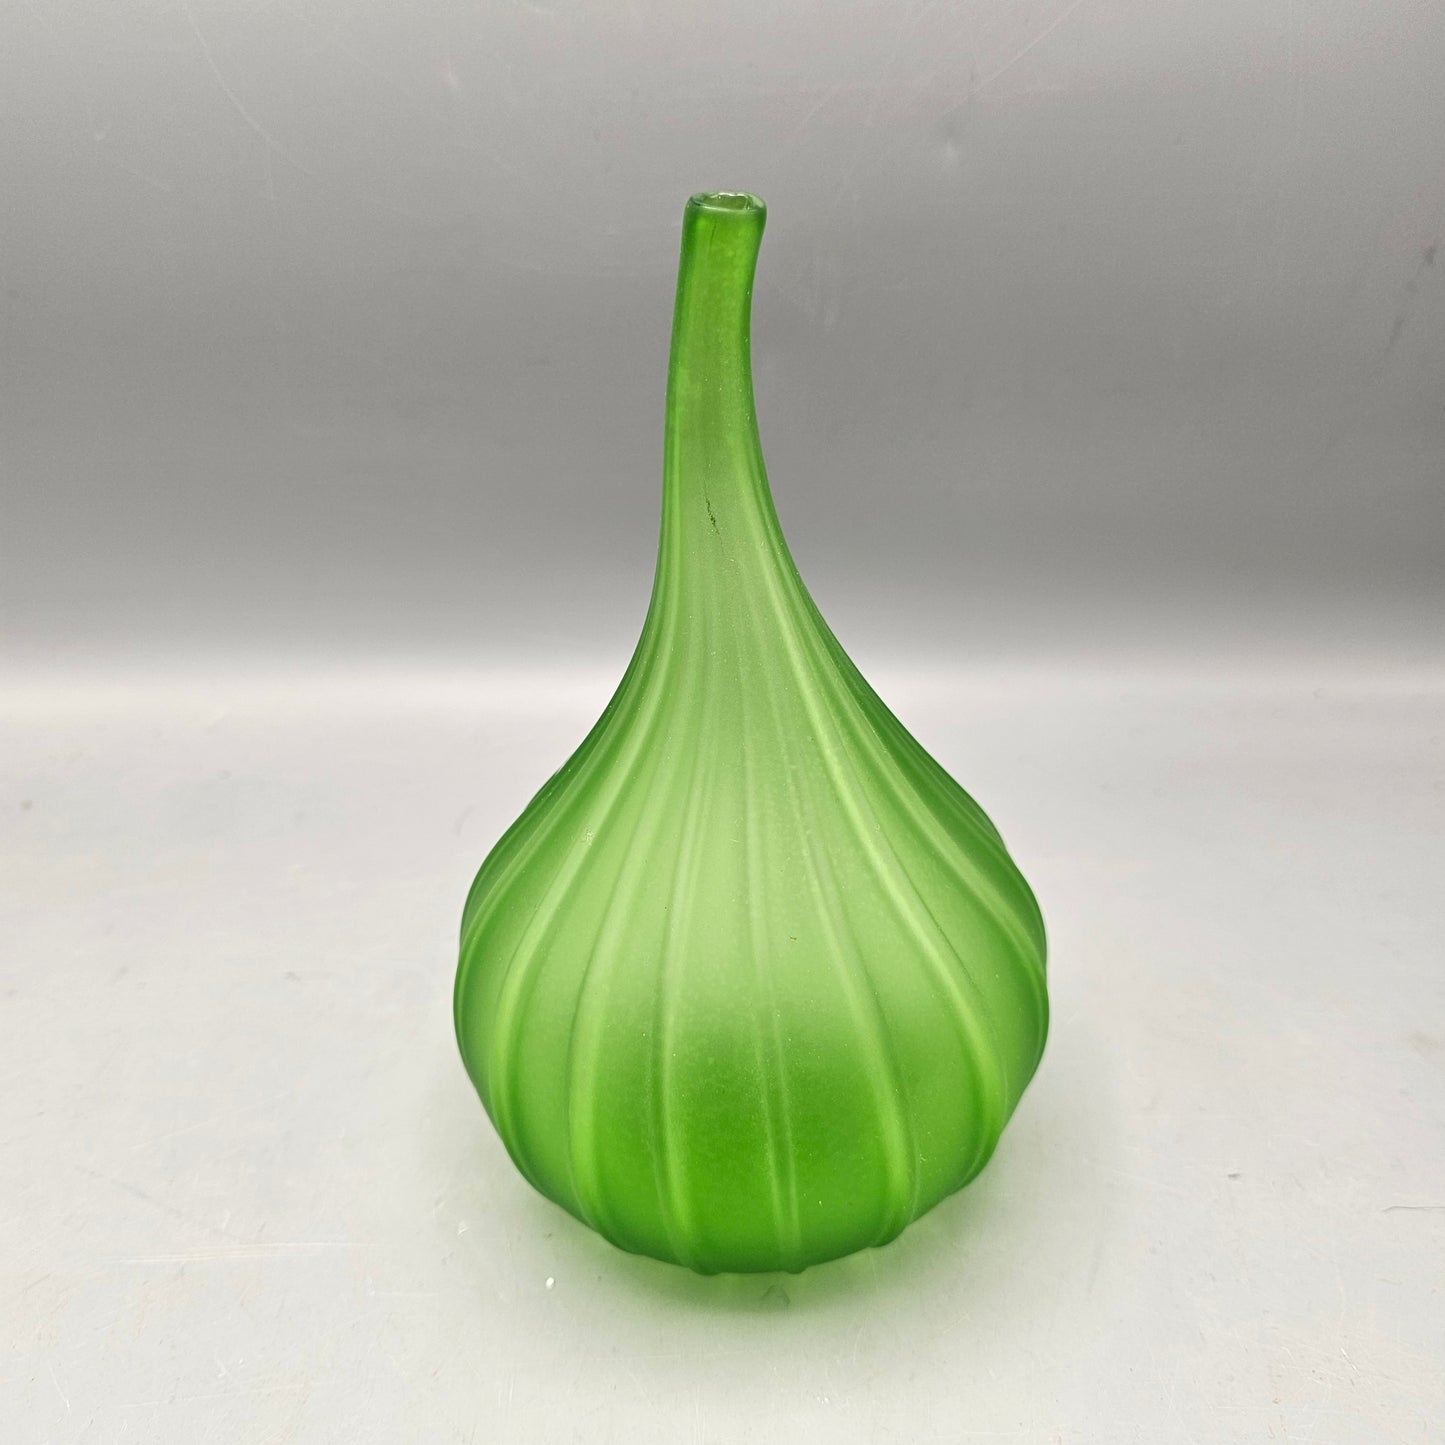 Salviati Blown Glass Drop Vase Designed by Renzo Stellon (Italian, born 1943